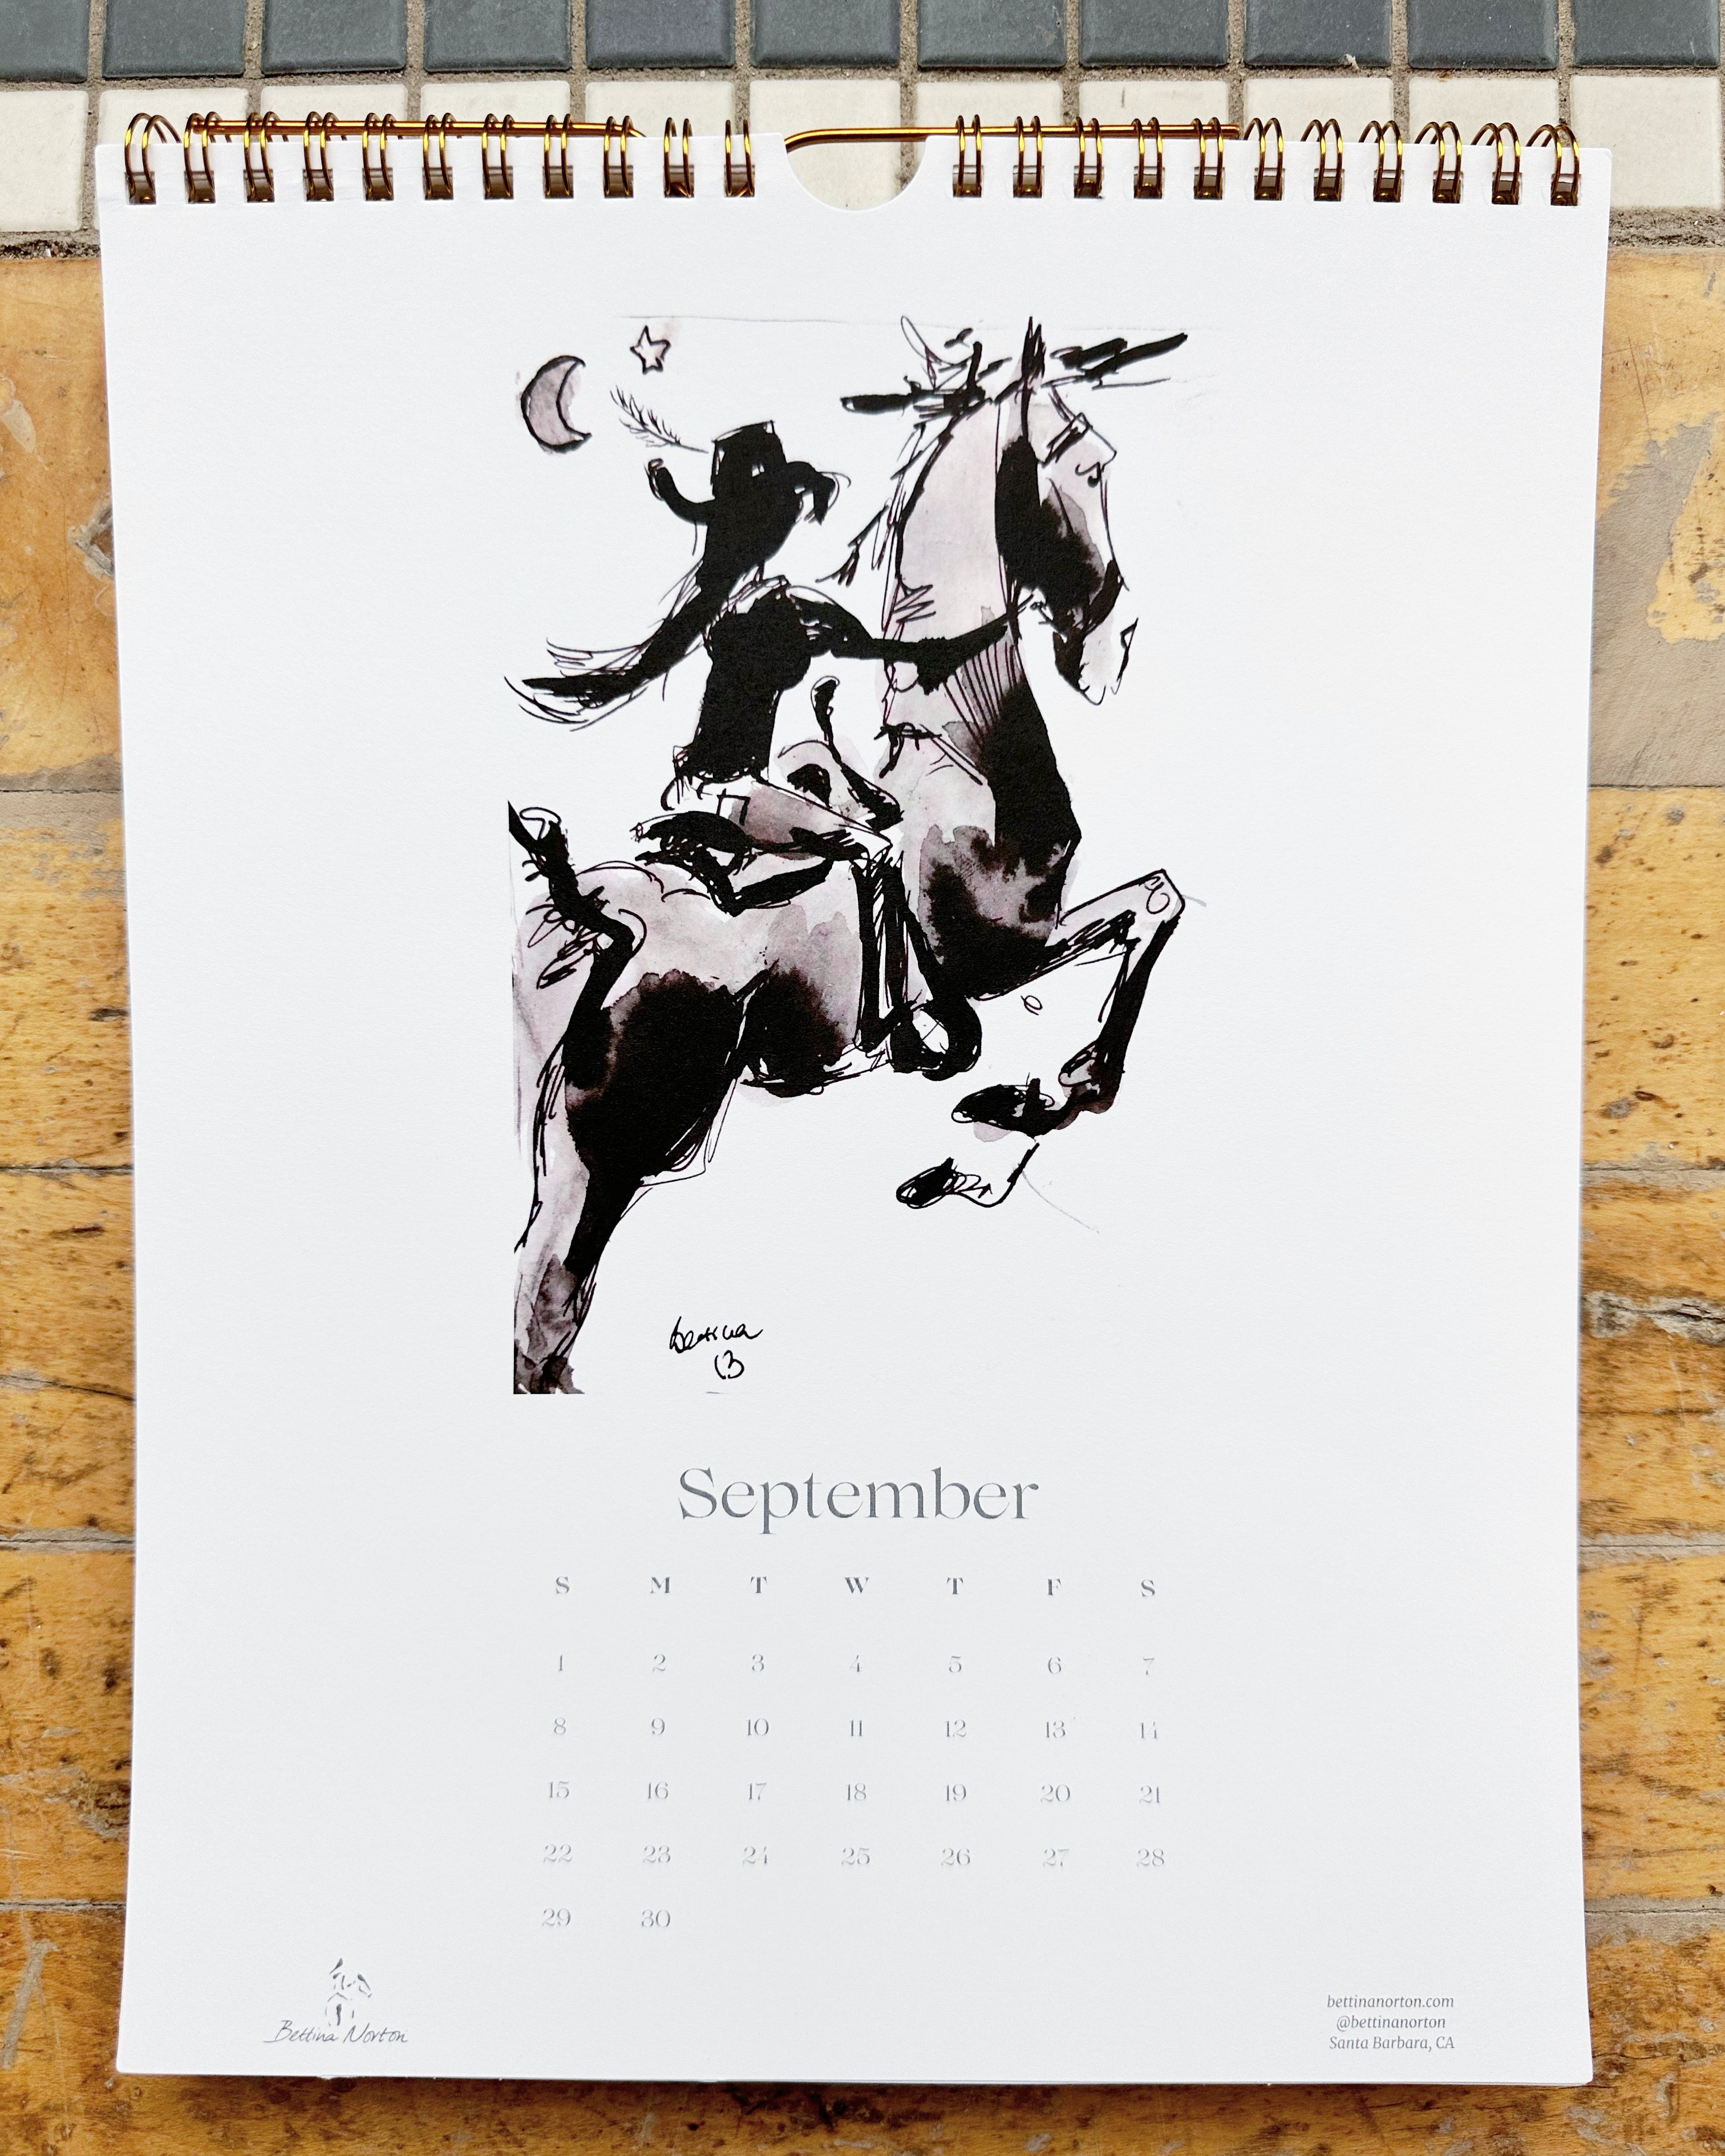 2024 Equestrian Dreams Calendar